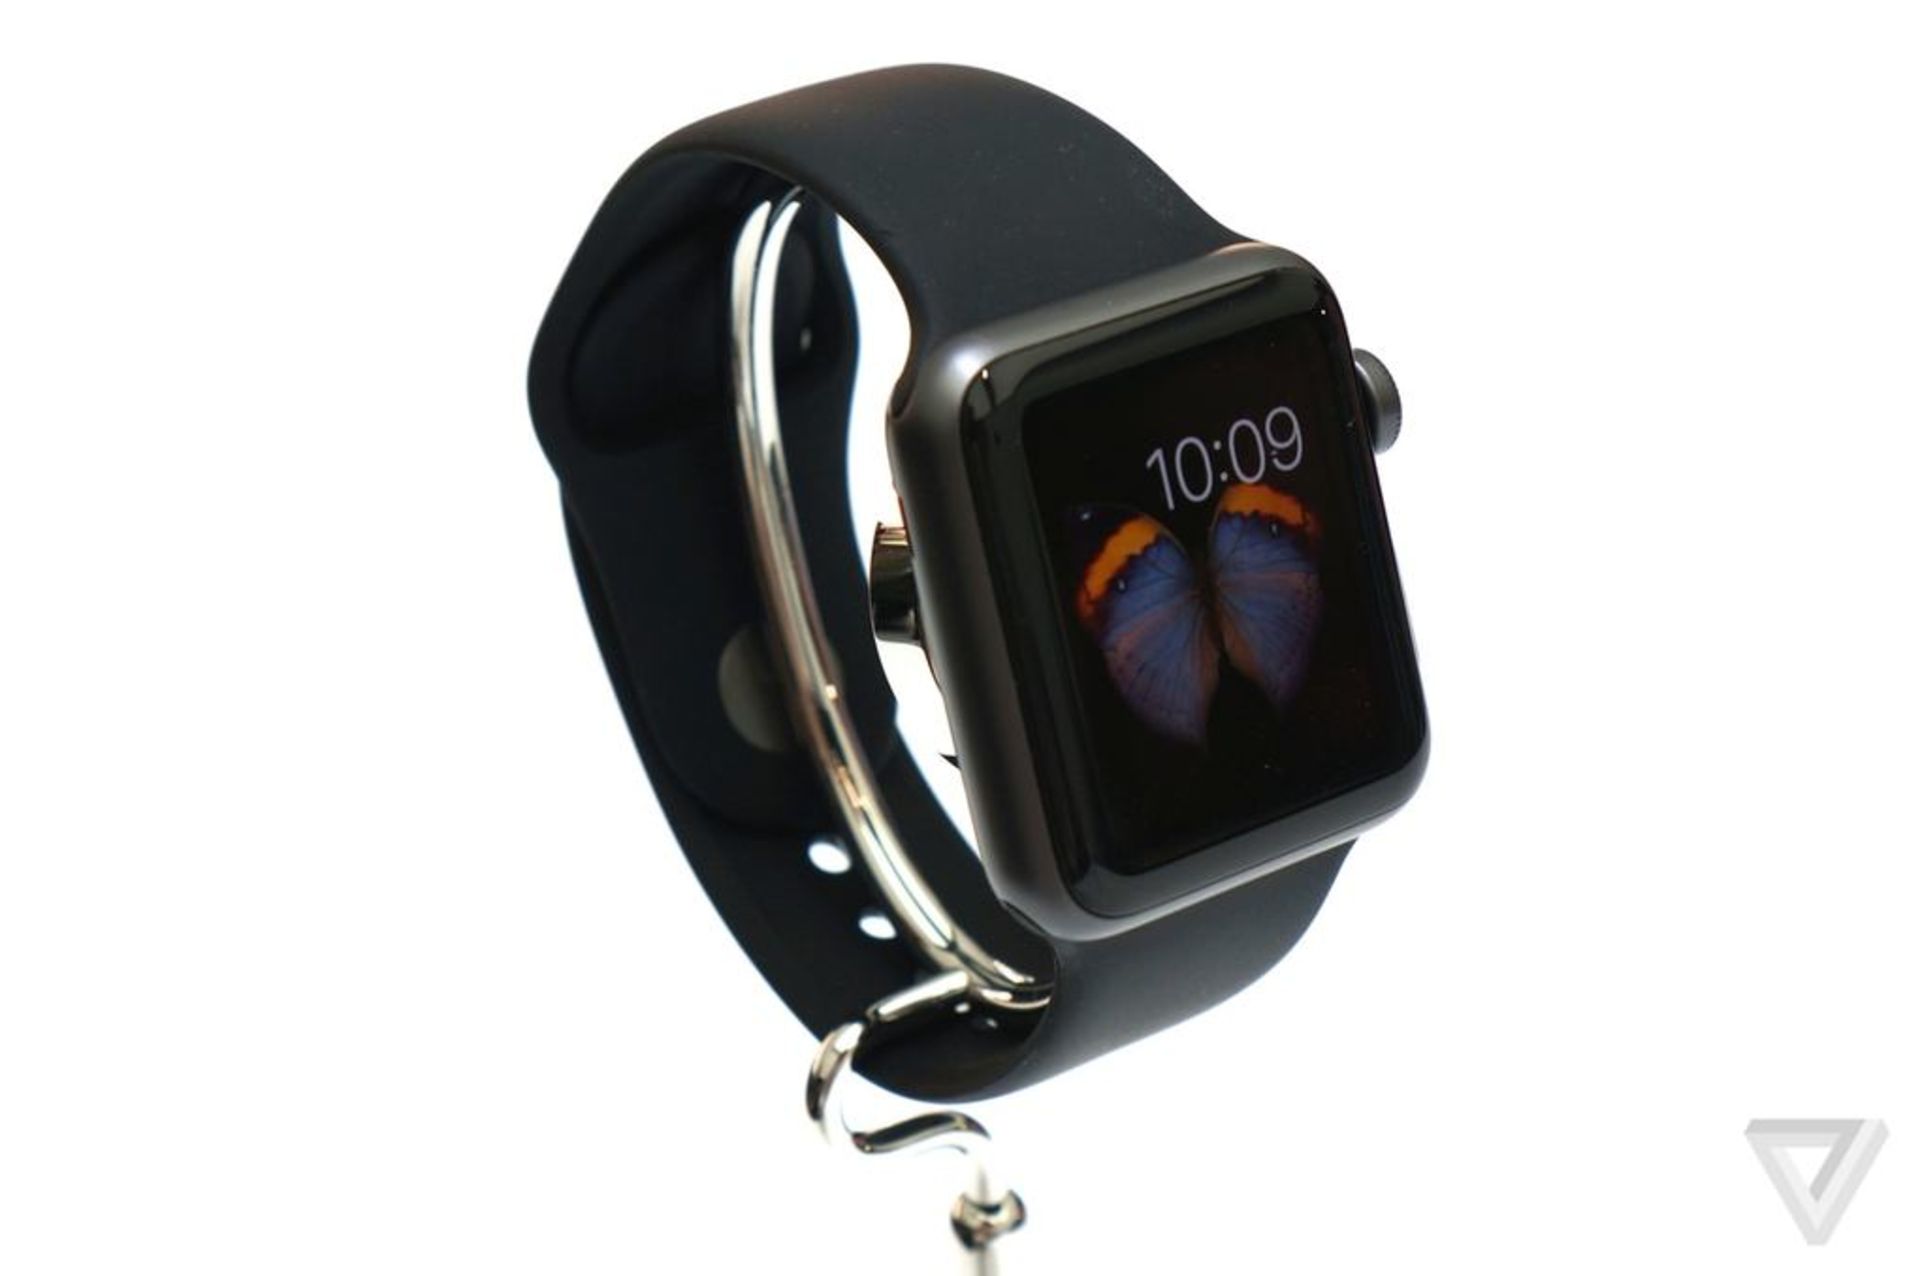 apple-watch-2-theverge-11 1320 verge super wide